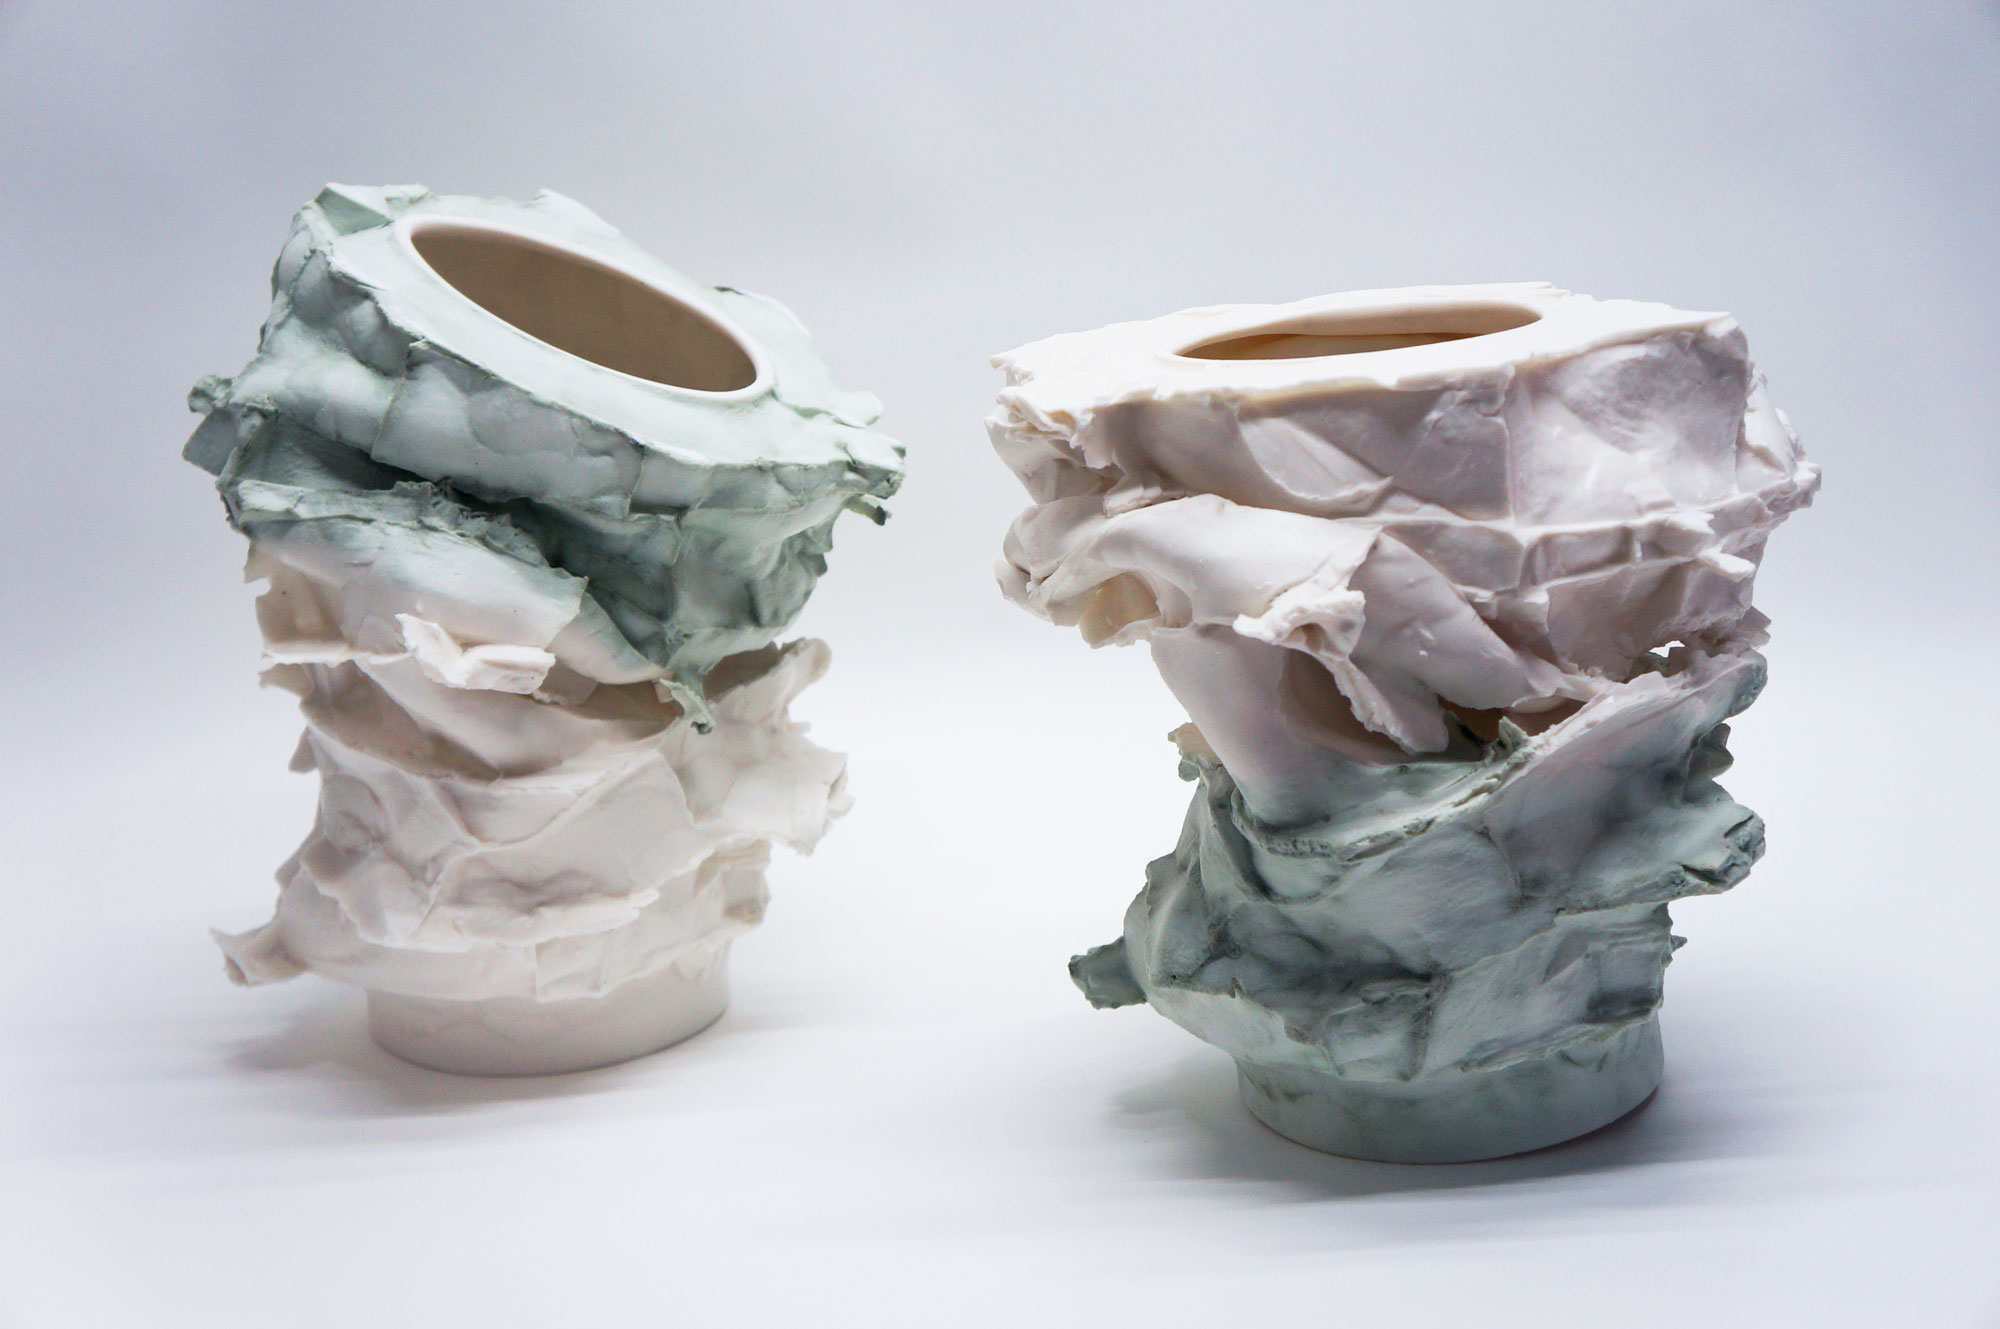 Monika Patuszynska (PO) European Prize for Applied Arts 2015 - TransForms Plus (Bastards series) - 2013 - Porcelain, slip cast from a modified plaster mould, parian ware - 30 x 30 x 35 each	

